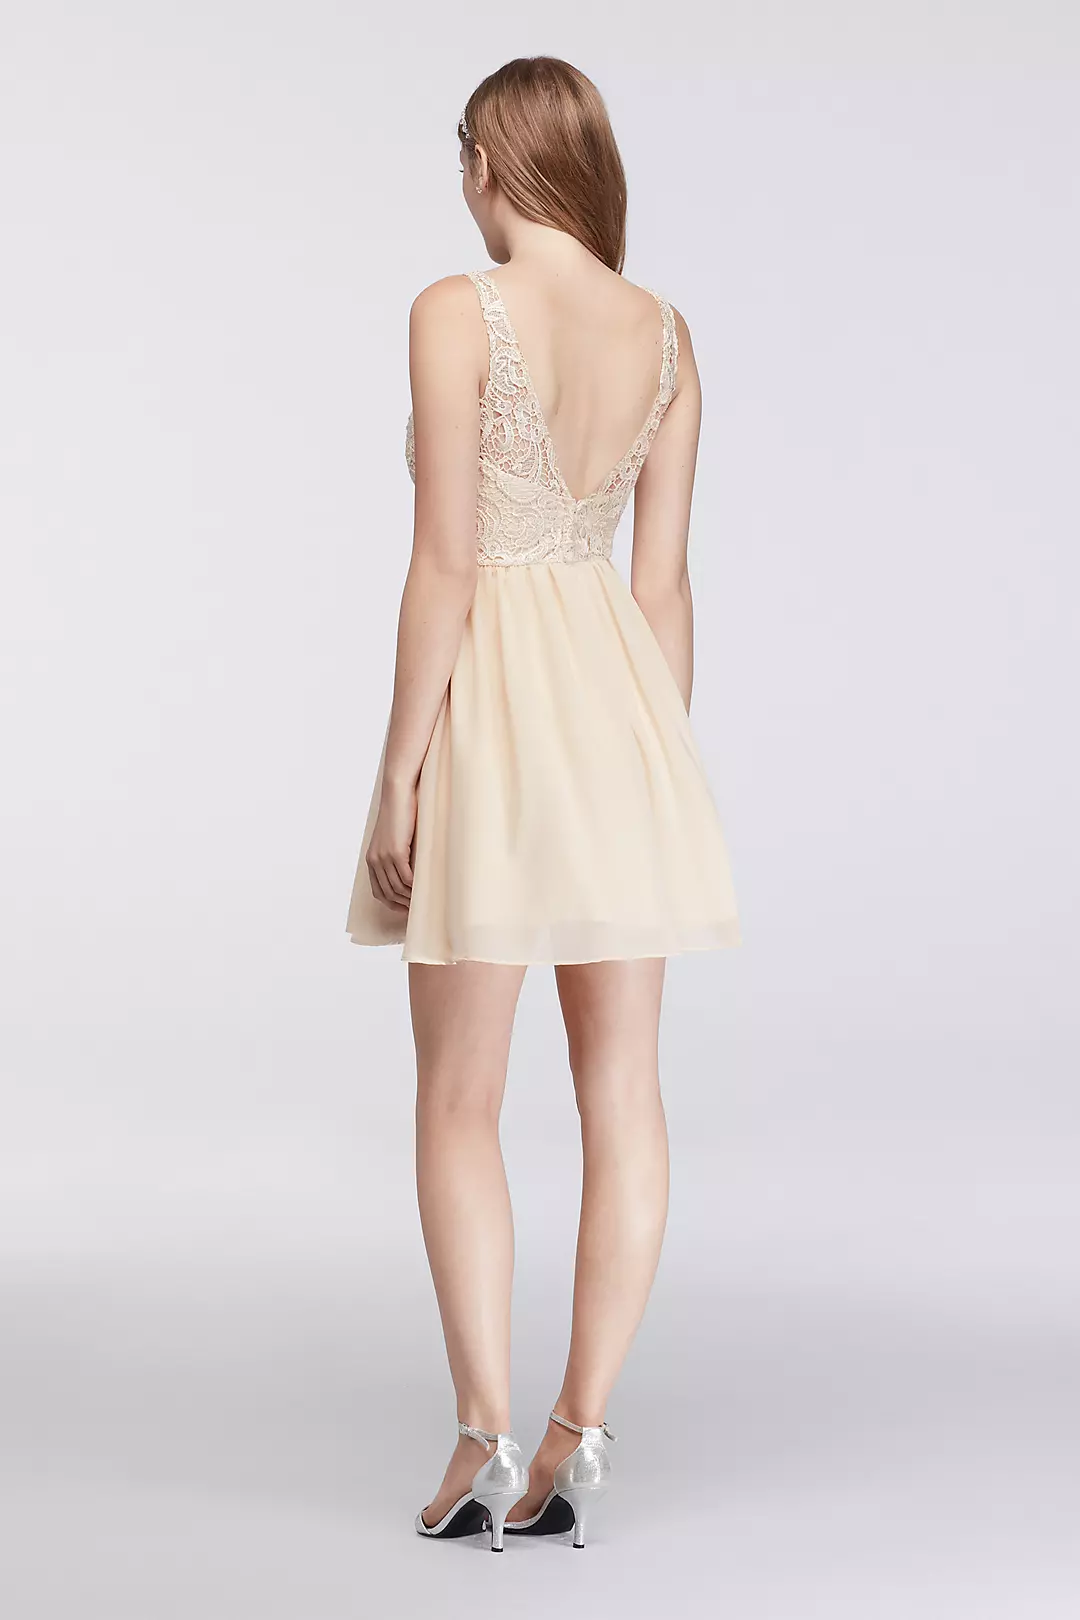 Sleeveless Homecoming Dress with Lace Bodice Image 2